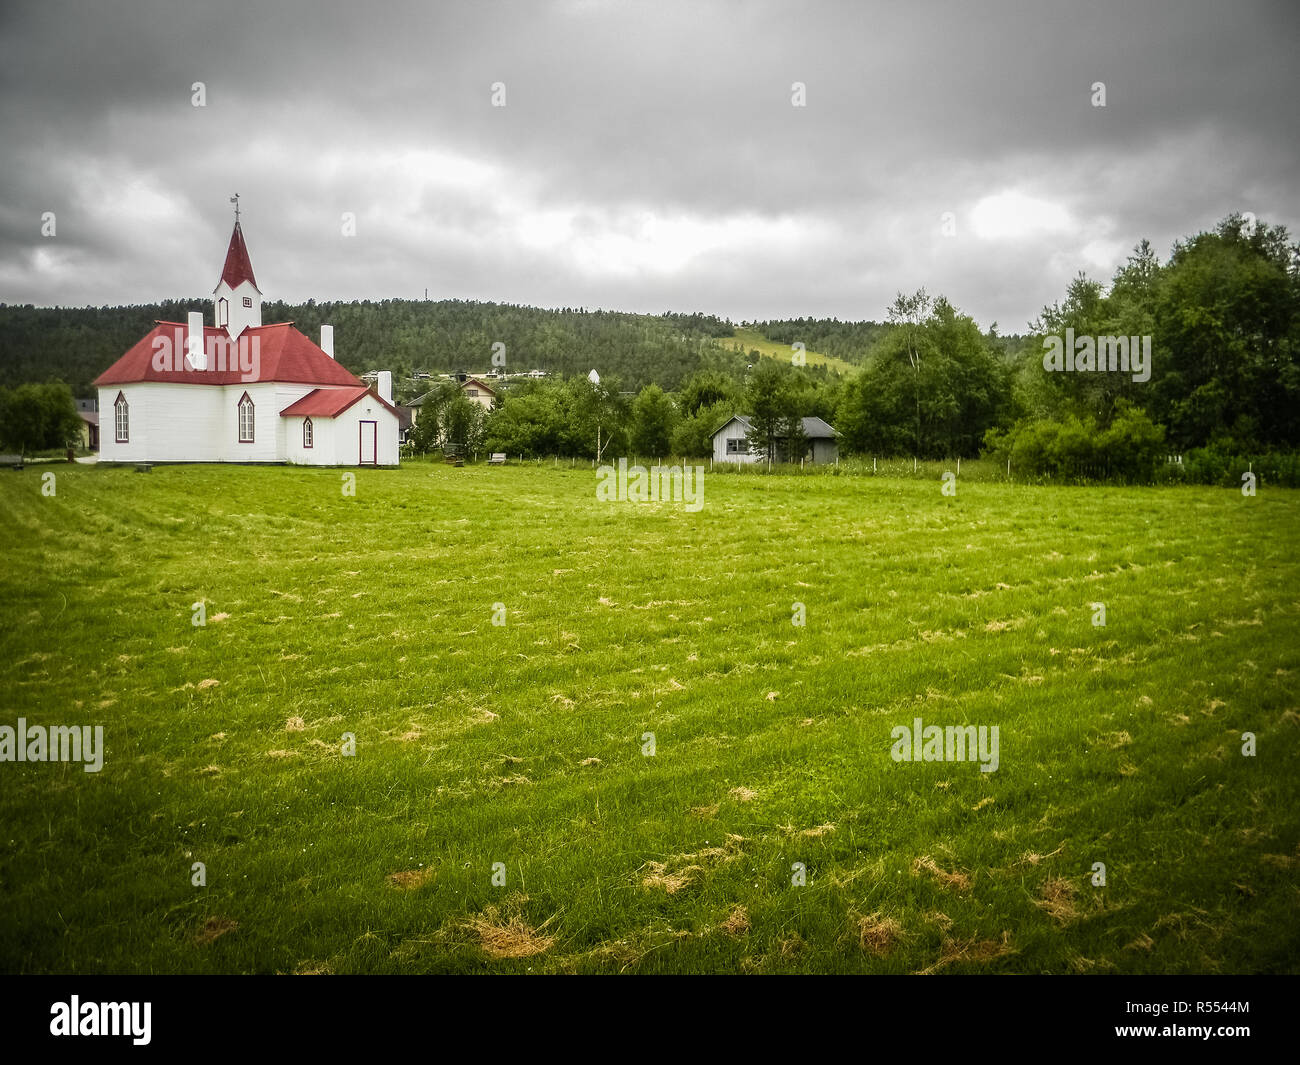 Karasjok chiesa di legno, Lapponia, Norvegia Foto Stock